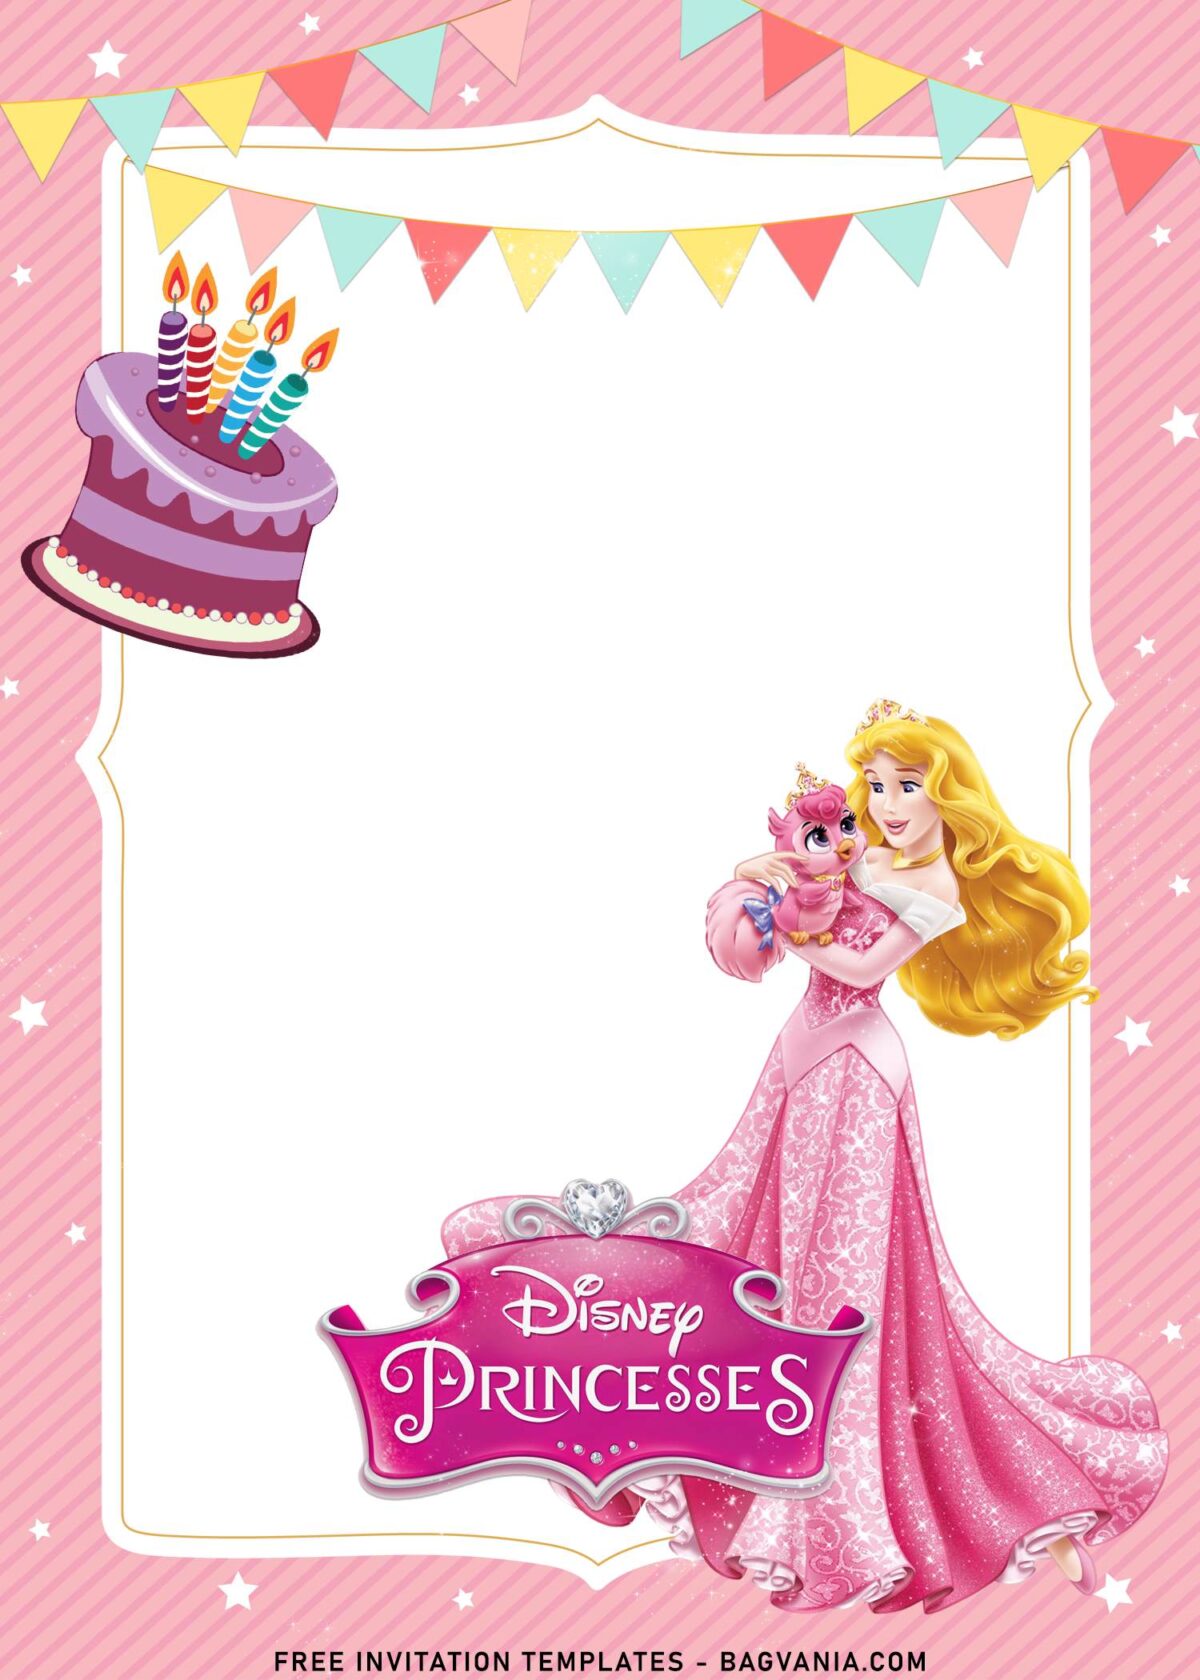 9+ Disney Princess And Castle Birthday Invitation Templates with Princess Aurora